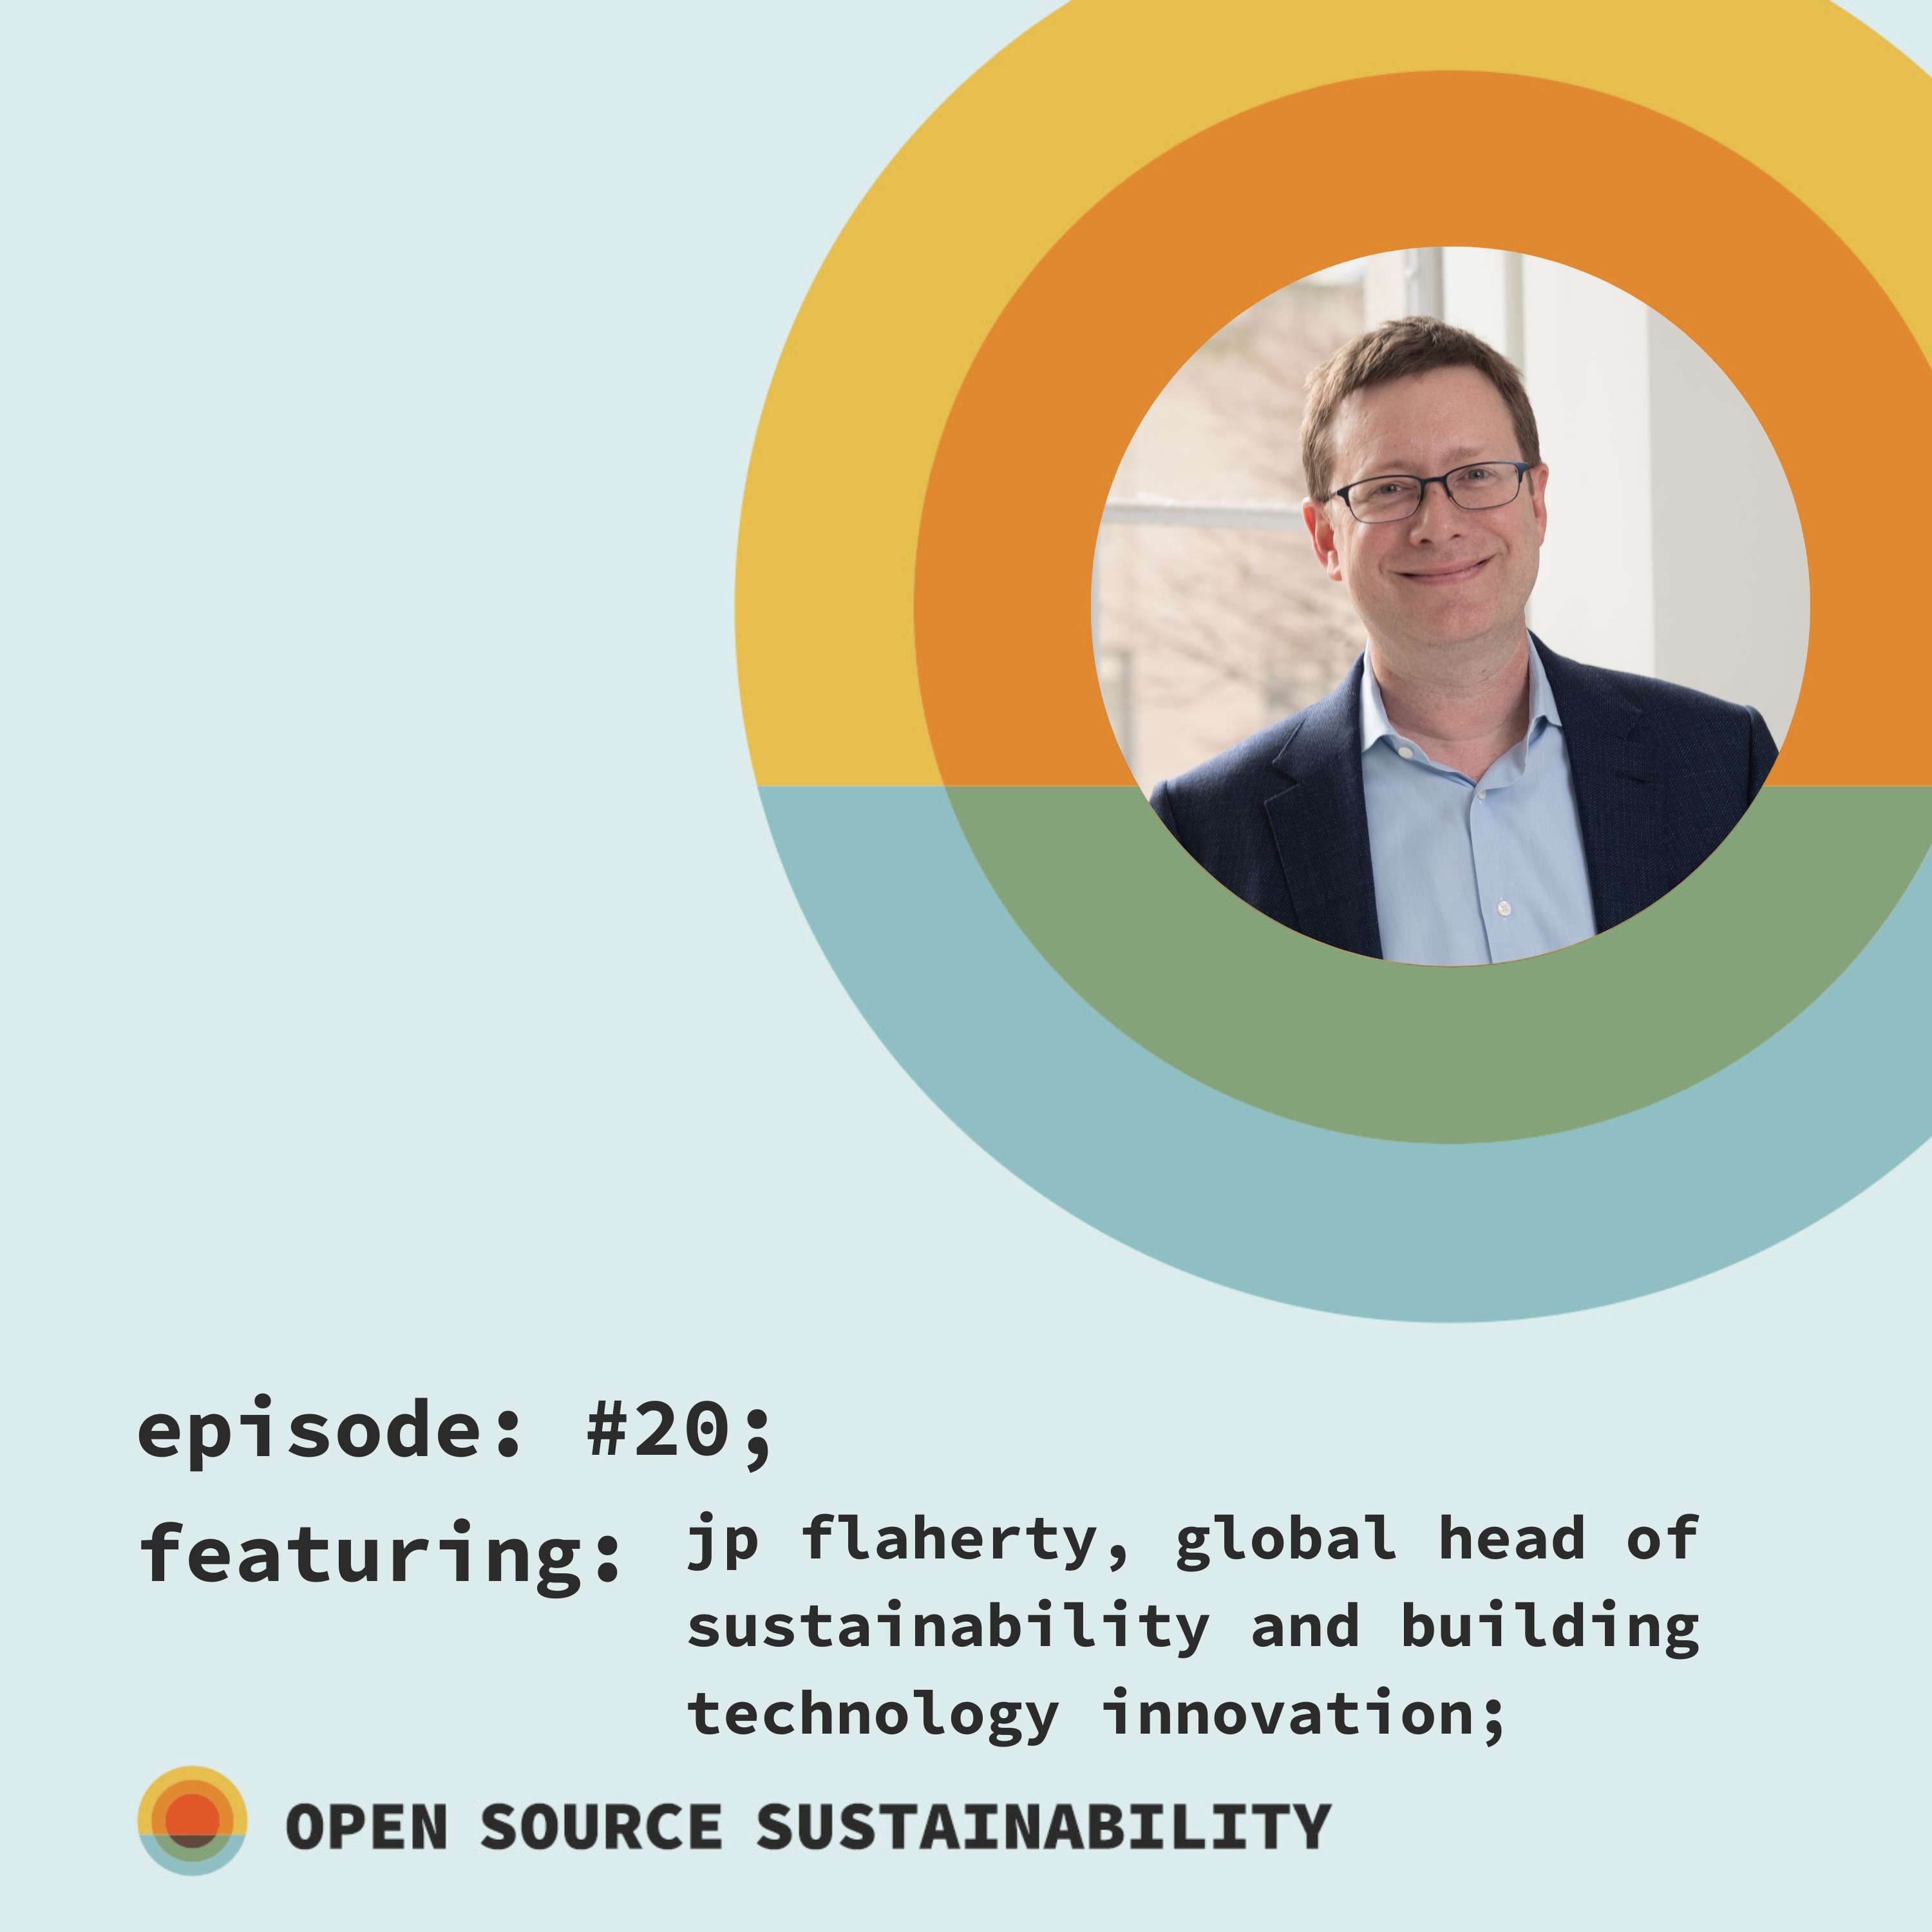 Tishman Speyer: Global Head of Sustainability, JP Flaherty